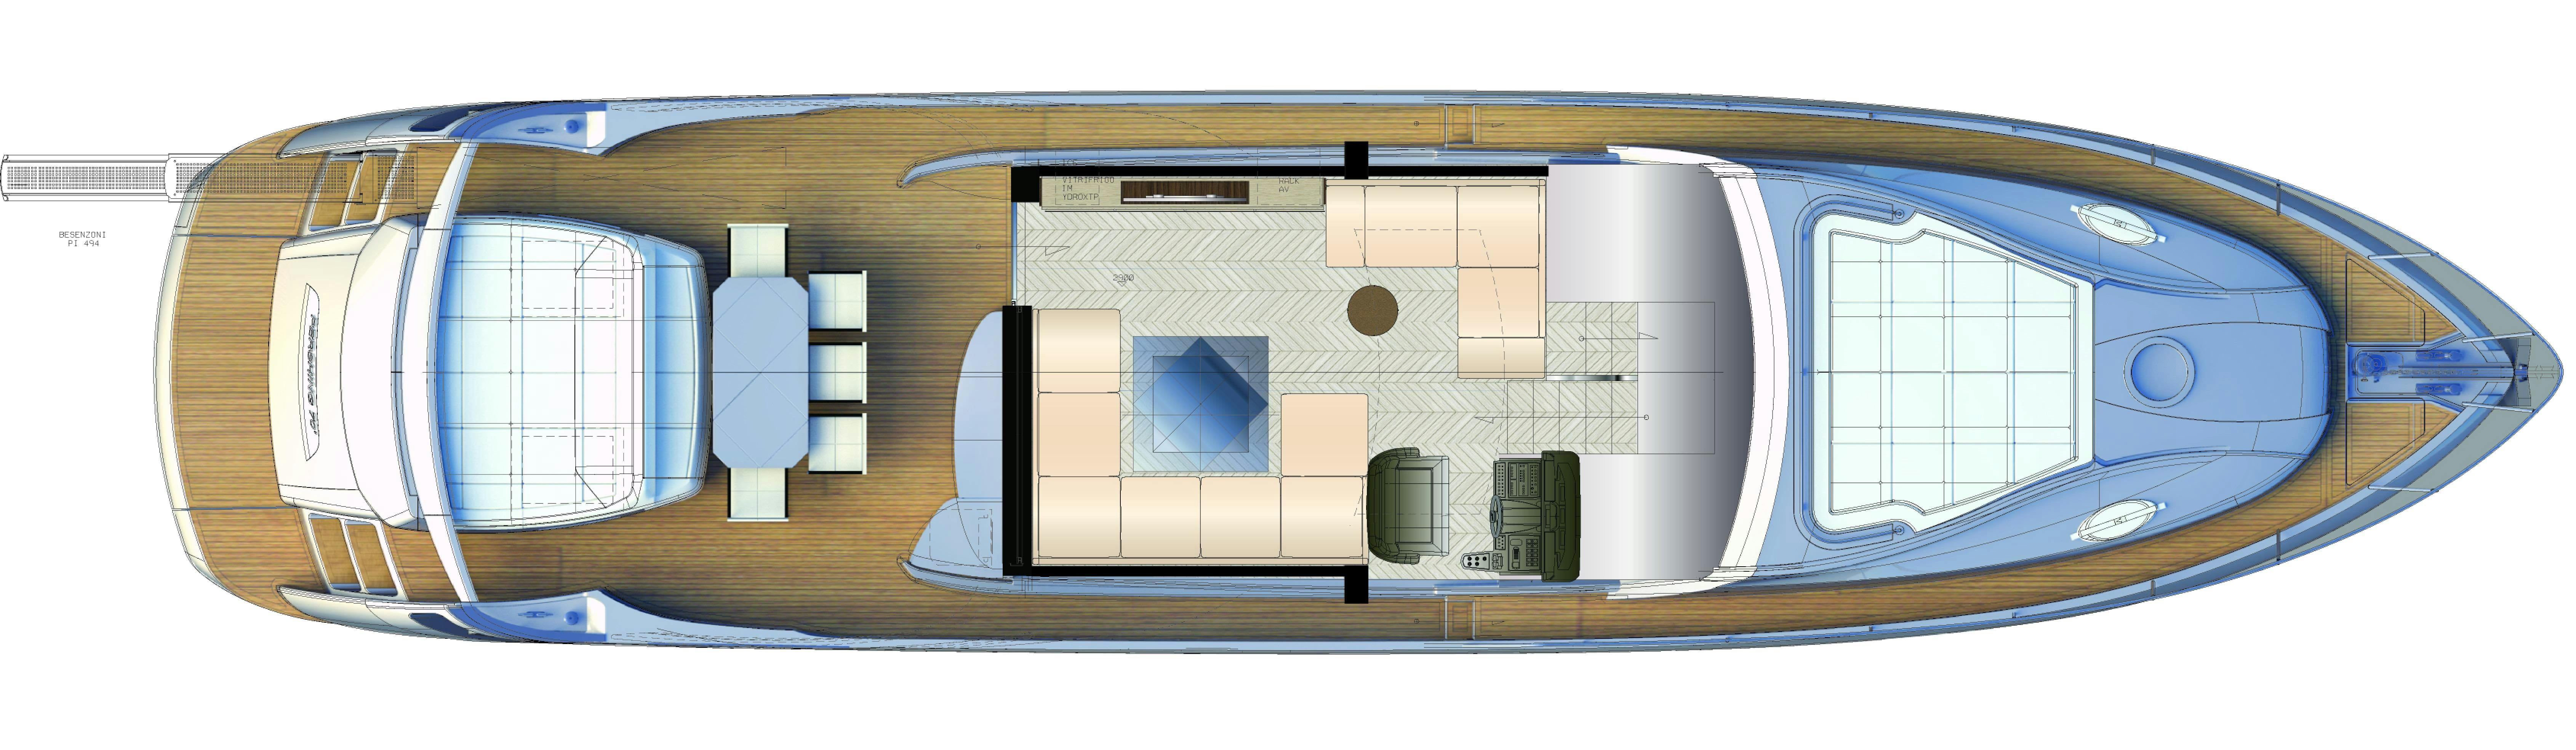 Manufacturer Provided Image: Pershing 70 Upper Deck Layout Plan